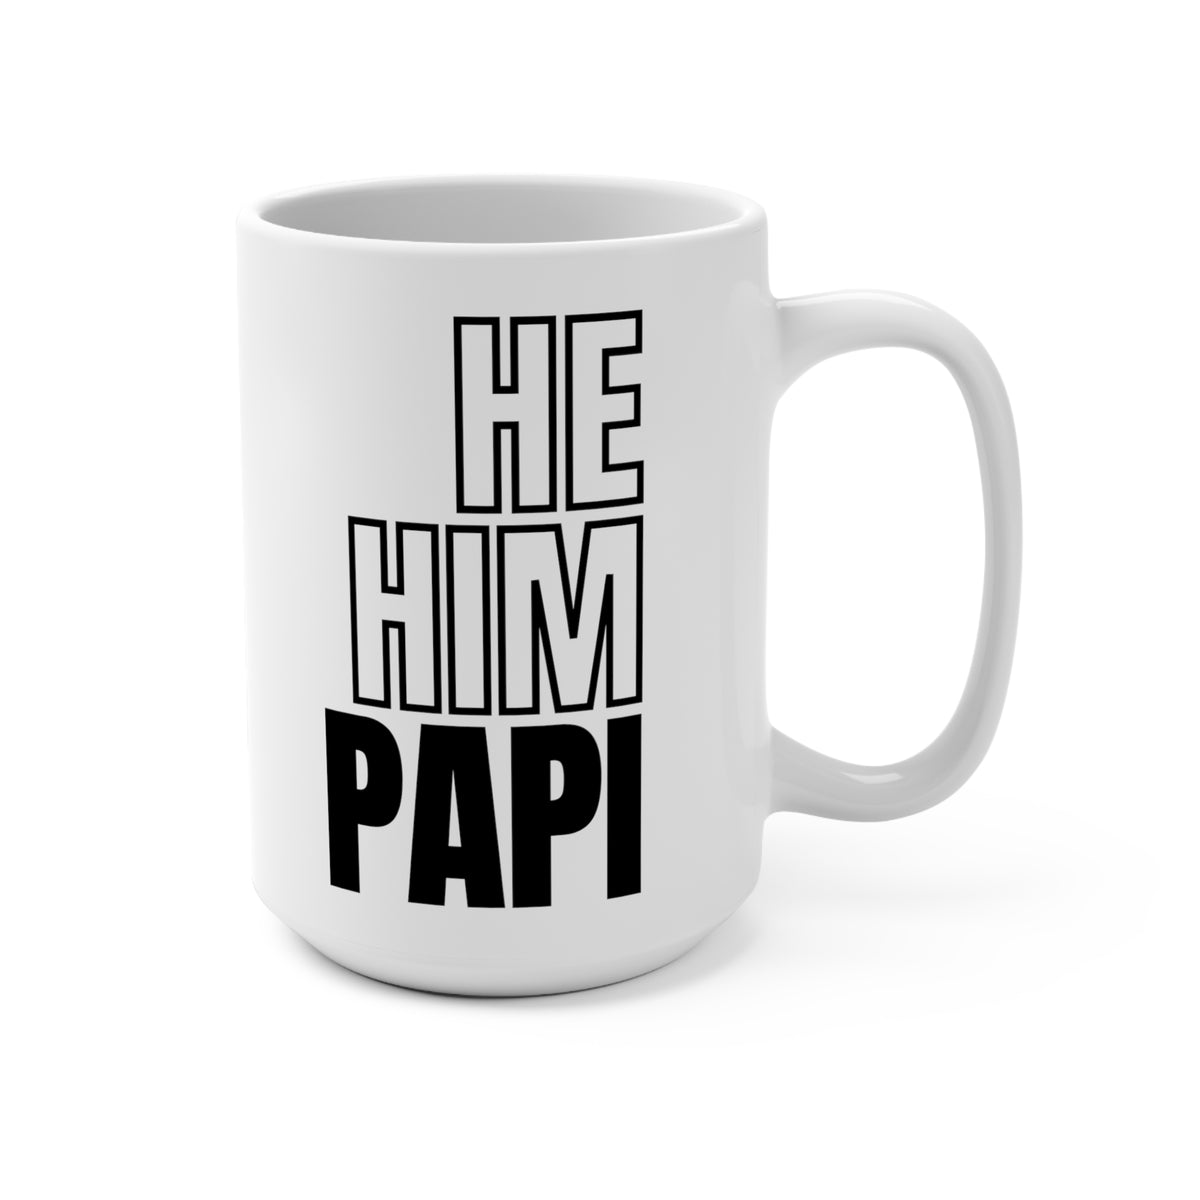 He, Him, Papi Mug